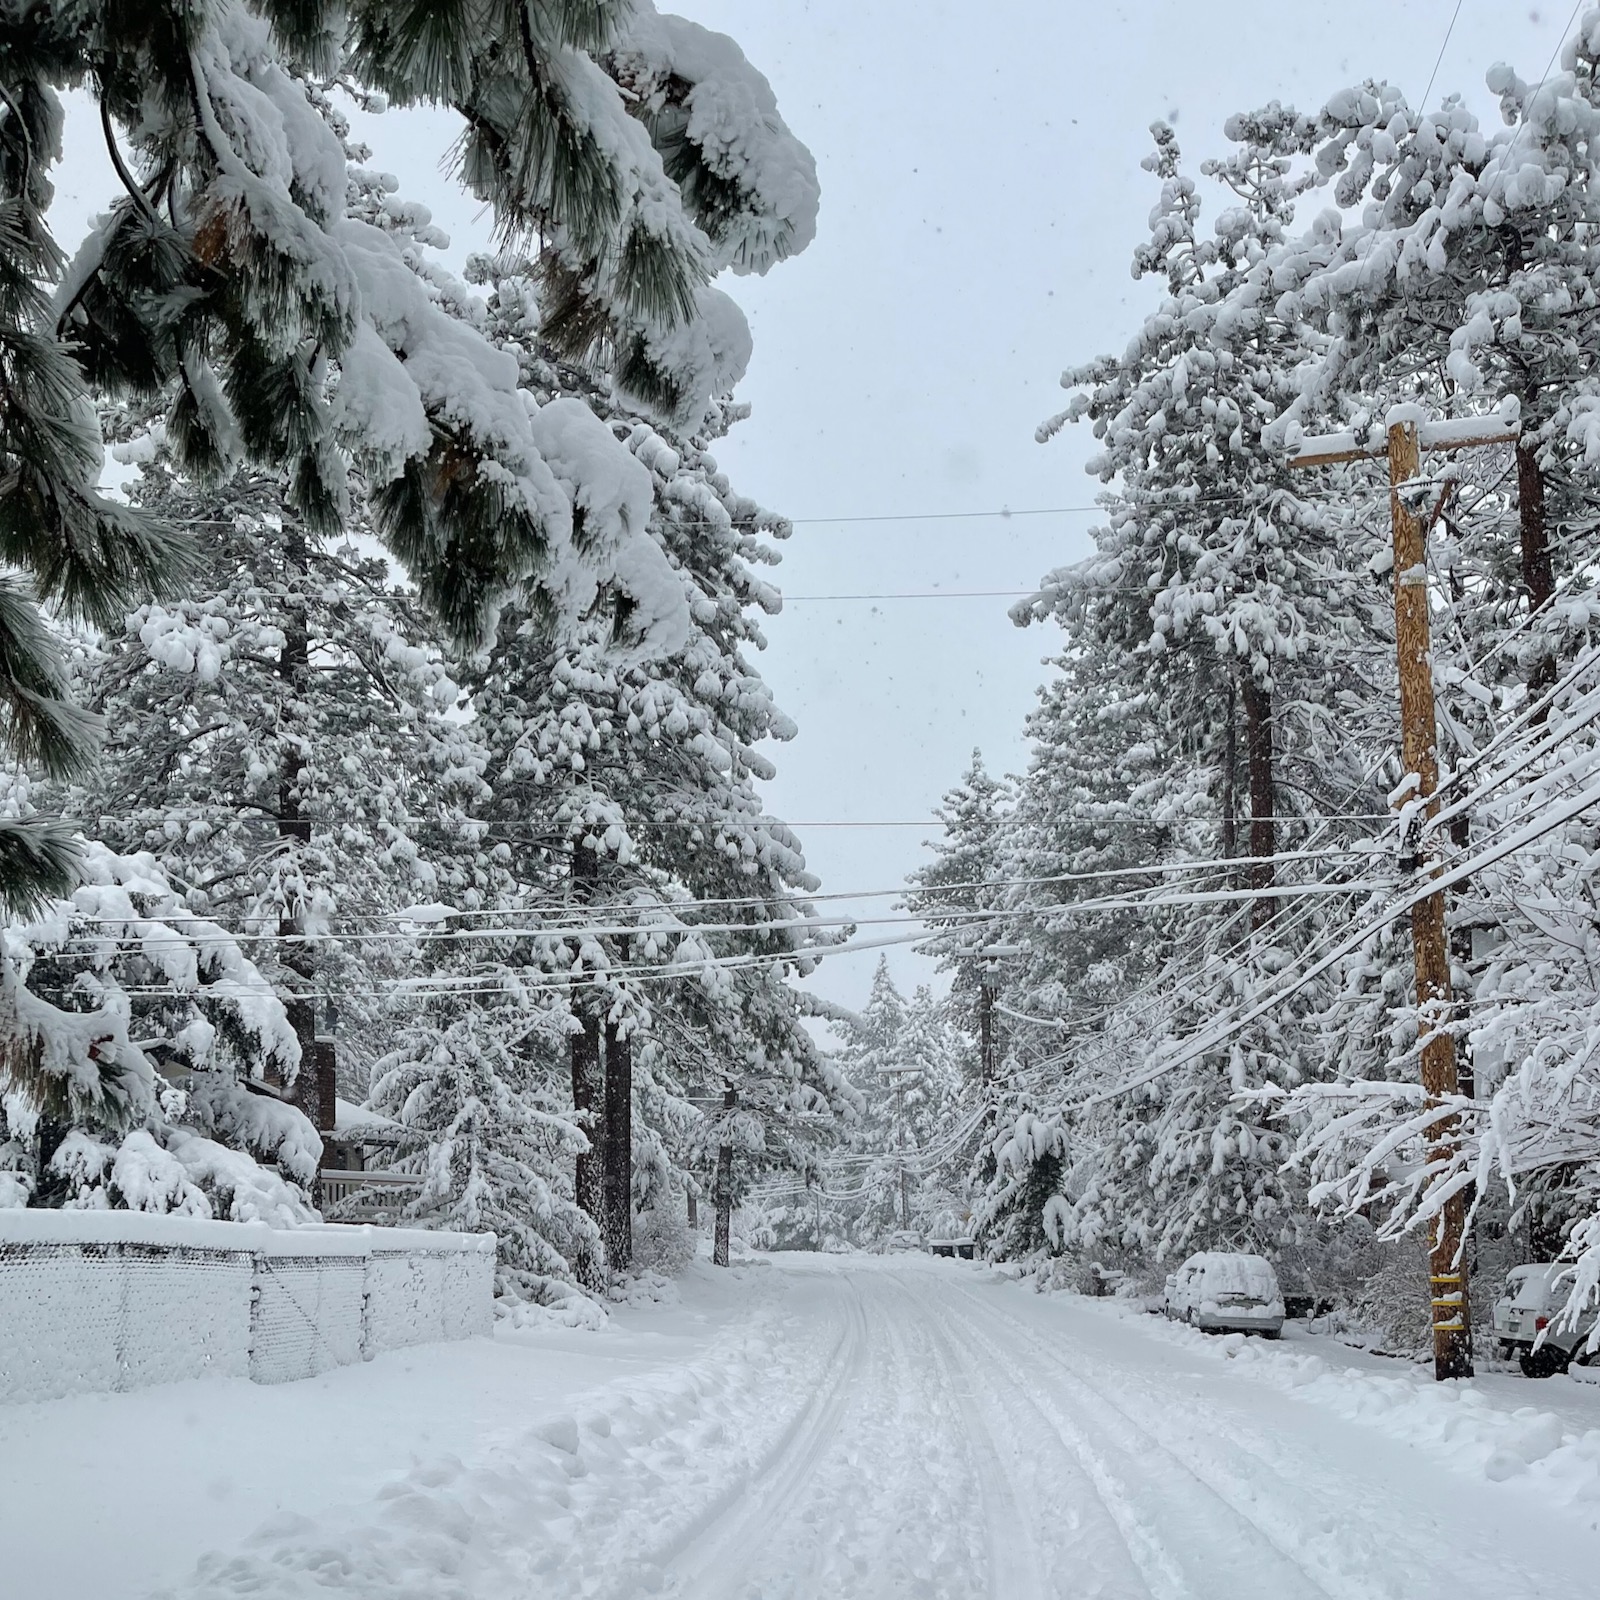 A snowy road in San Bernardino County, California